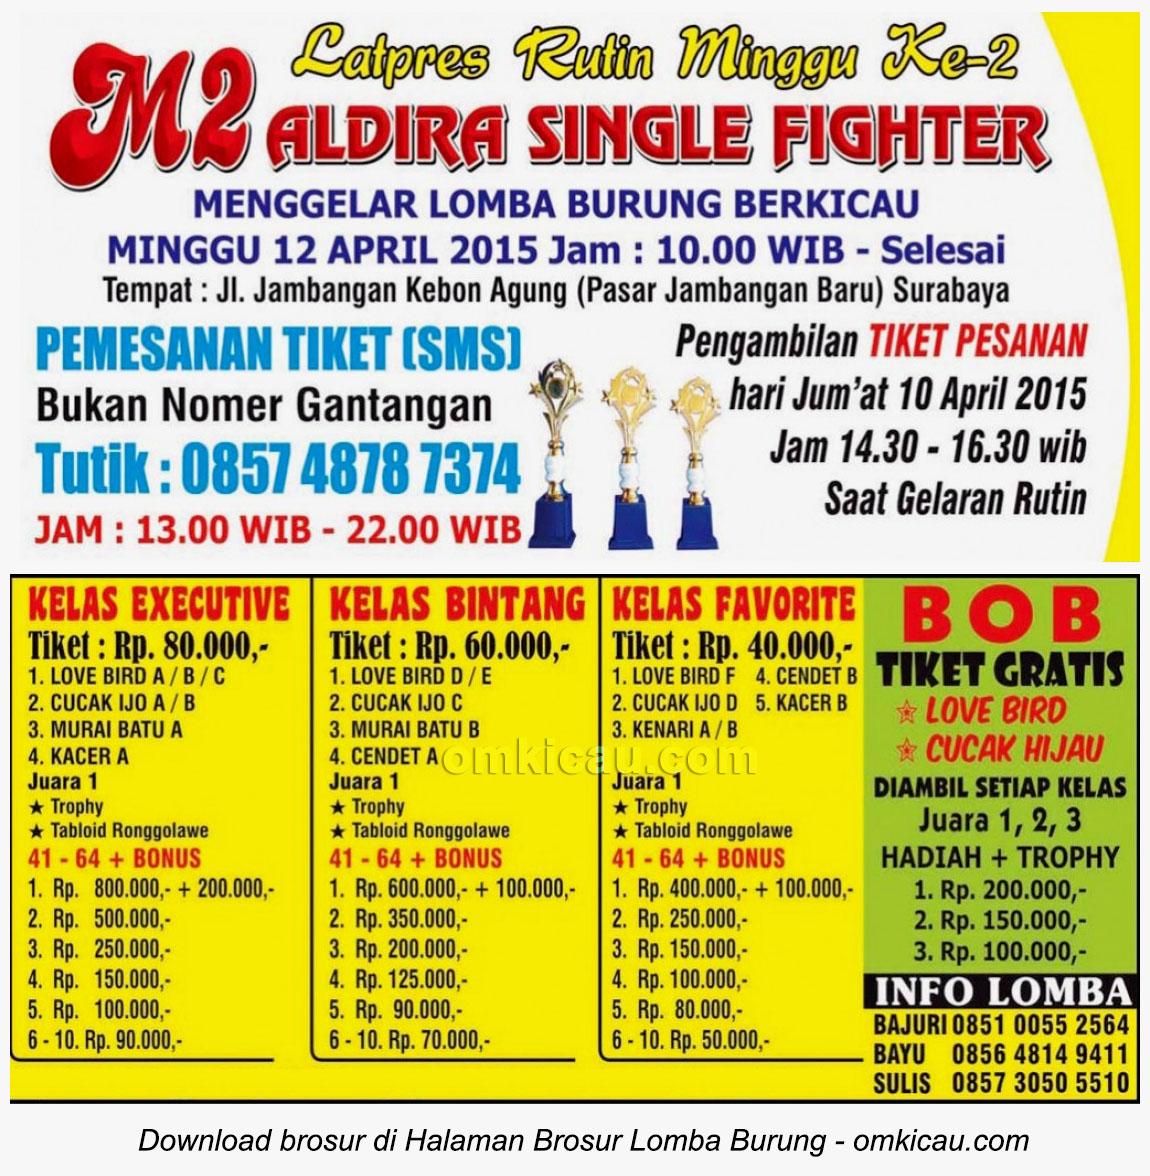 Brosur Latpres Aldira Single Fighter, Surabaya, 12 April 2015